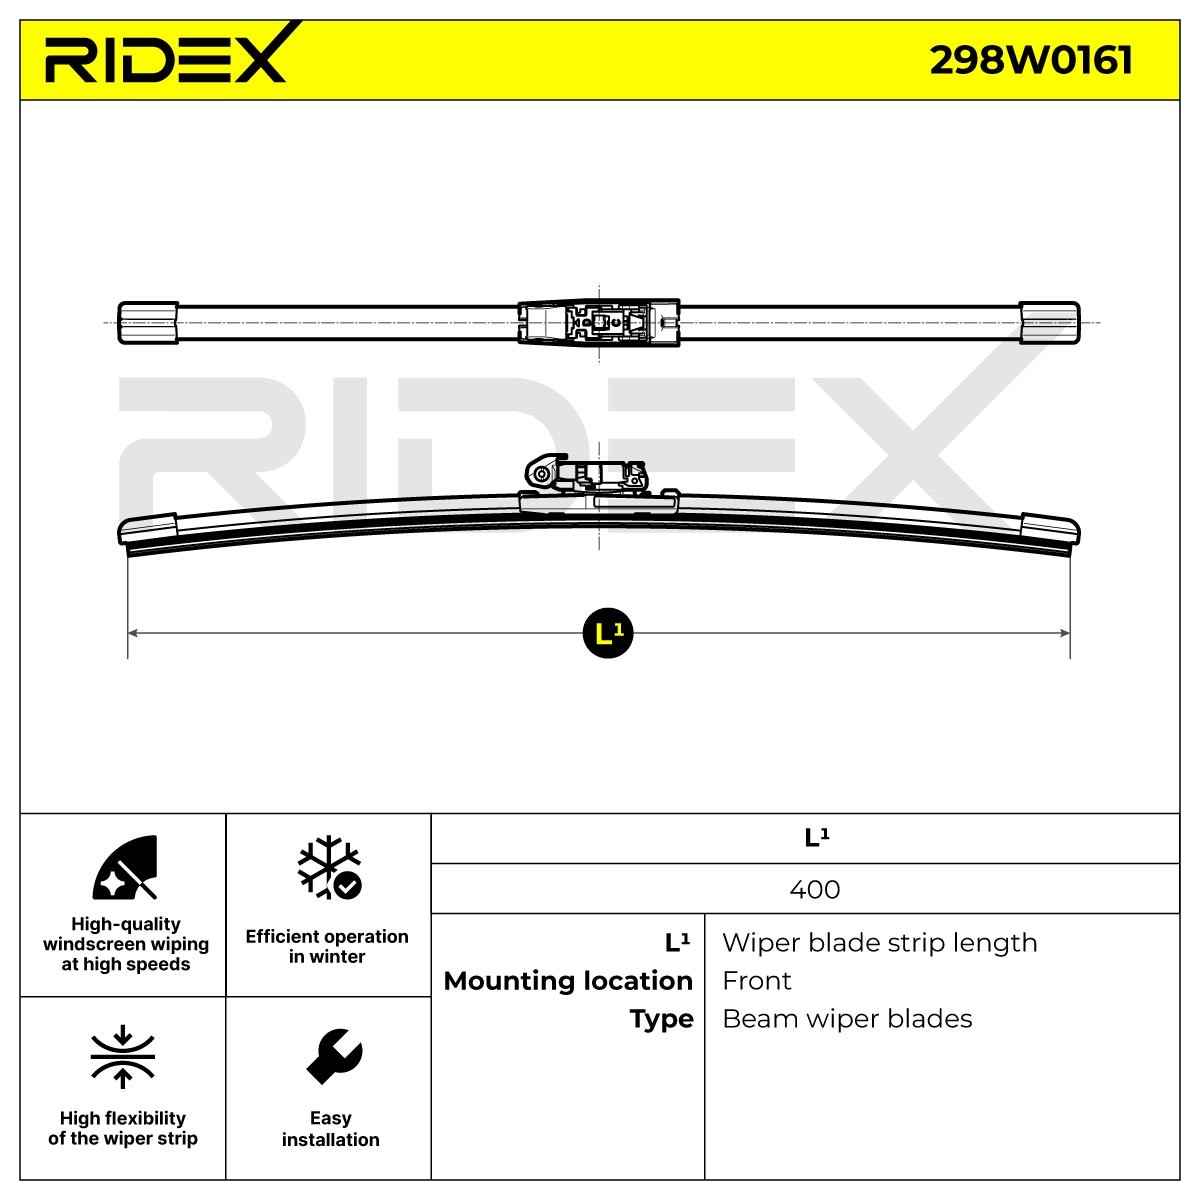 298W0161 Metlica brisalnika stekel RIDEX 298W0161 - Ogromna izbira